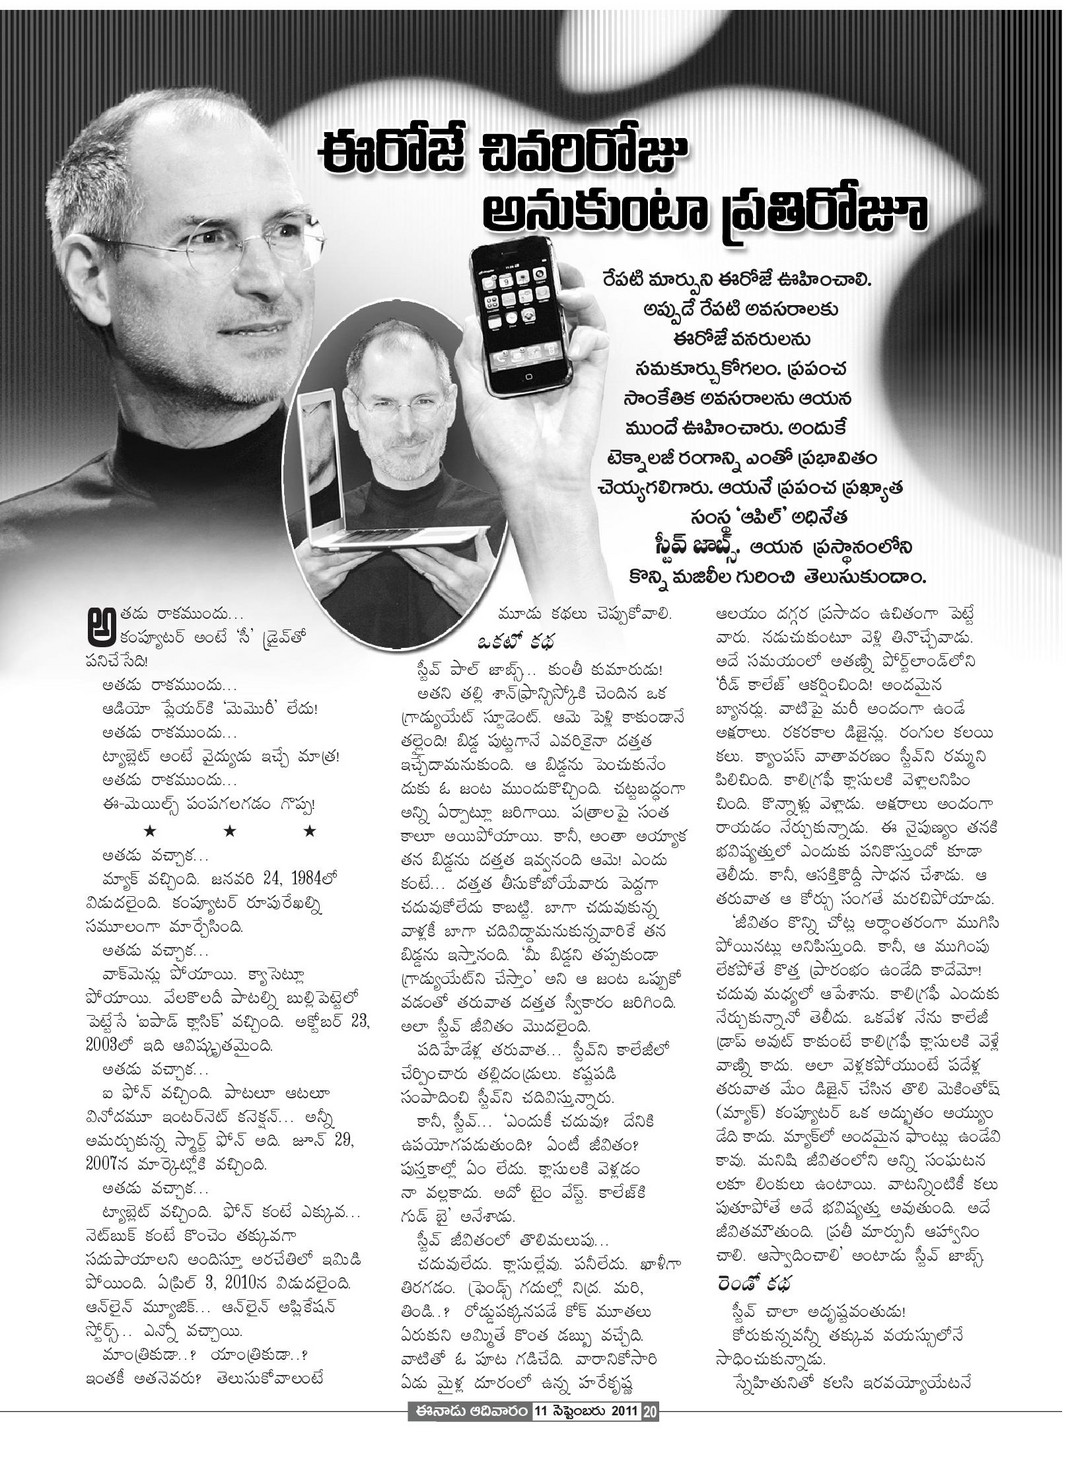 Steve Jobs Biography Telugu Pdf Free Download